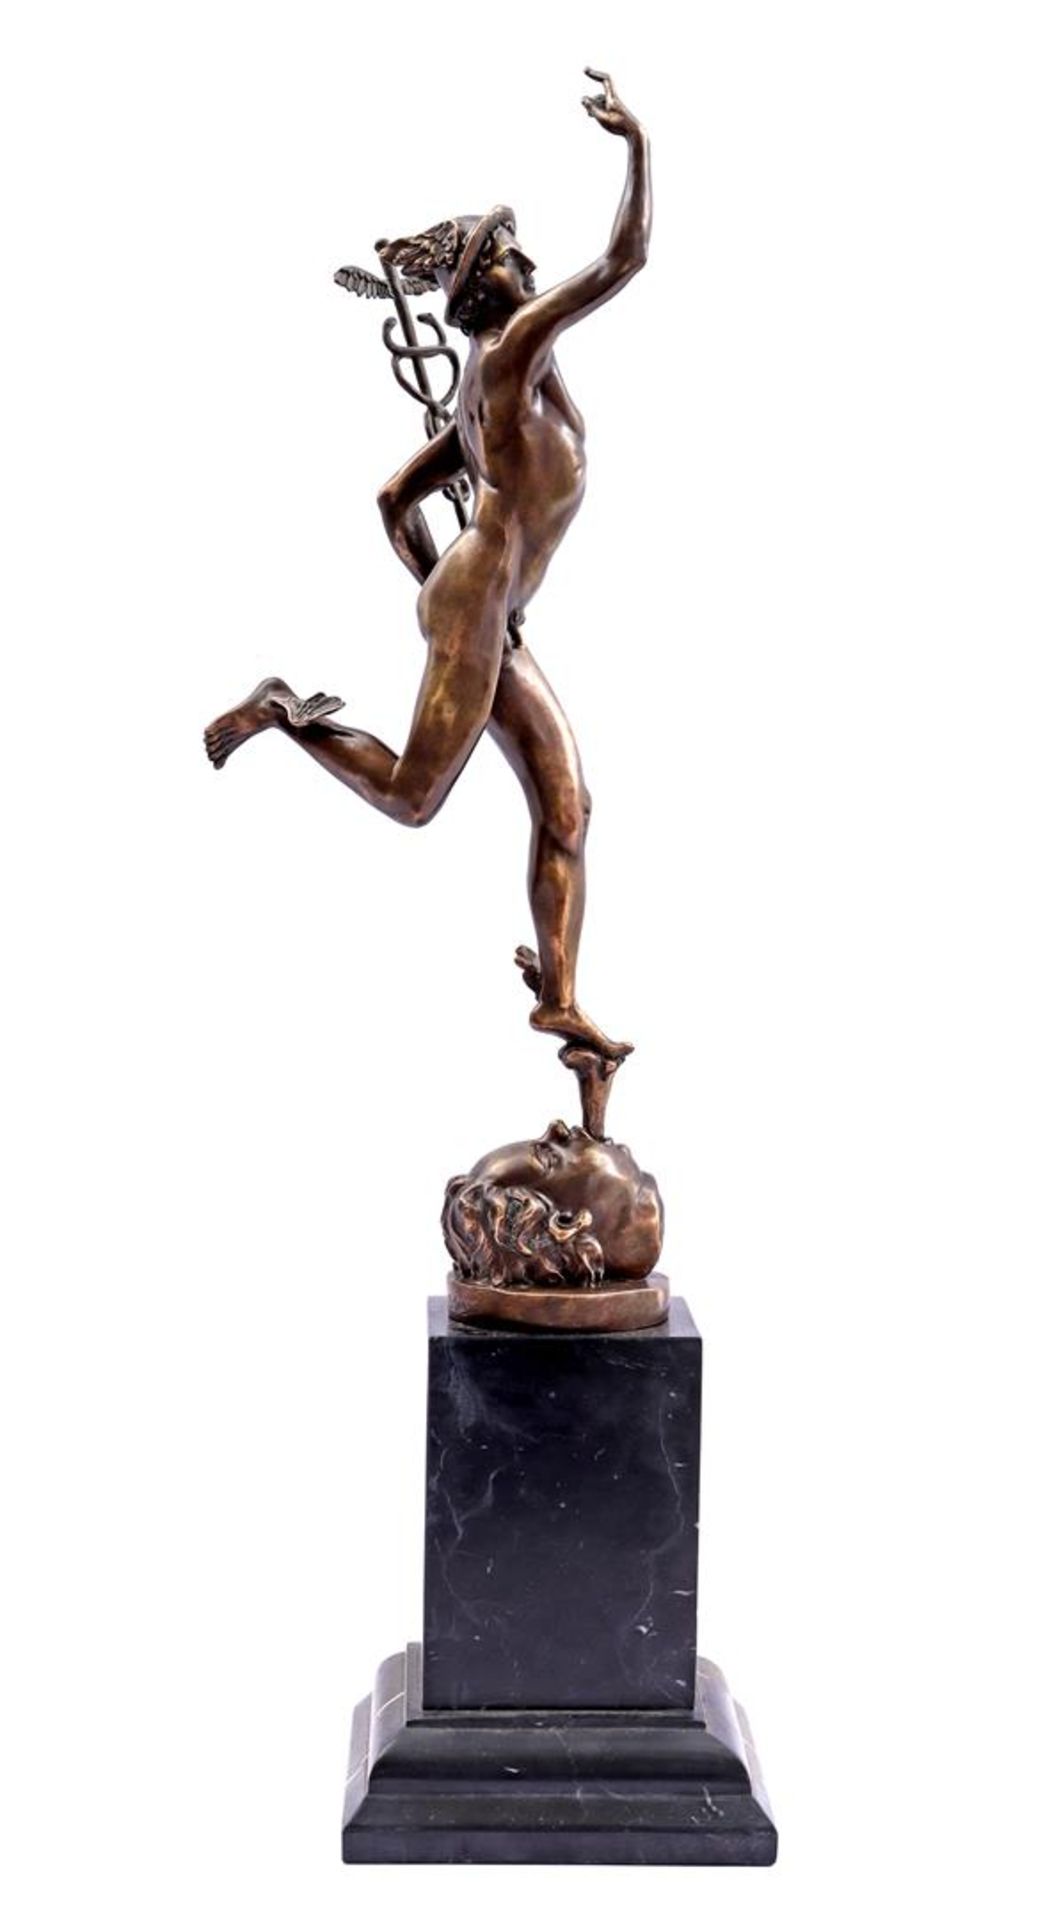 Bronze statue of the god Hermes, god of trade